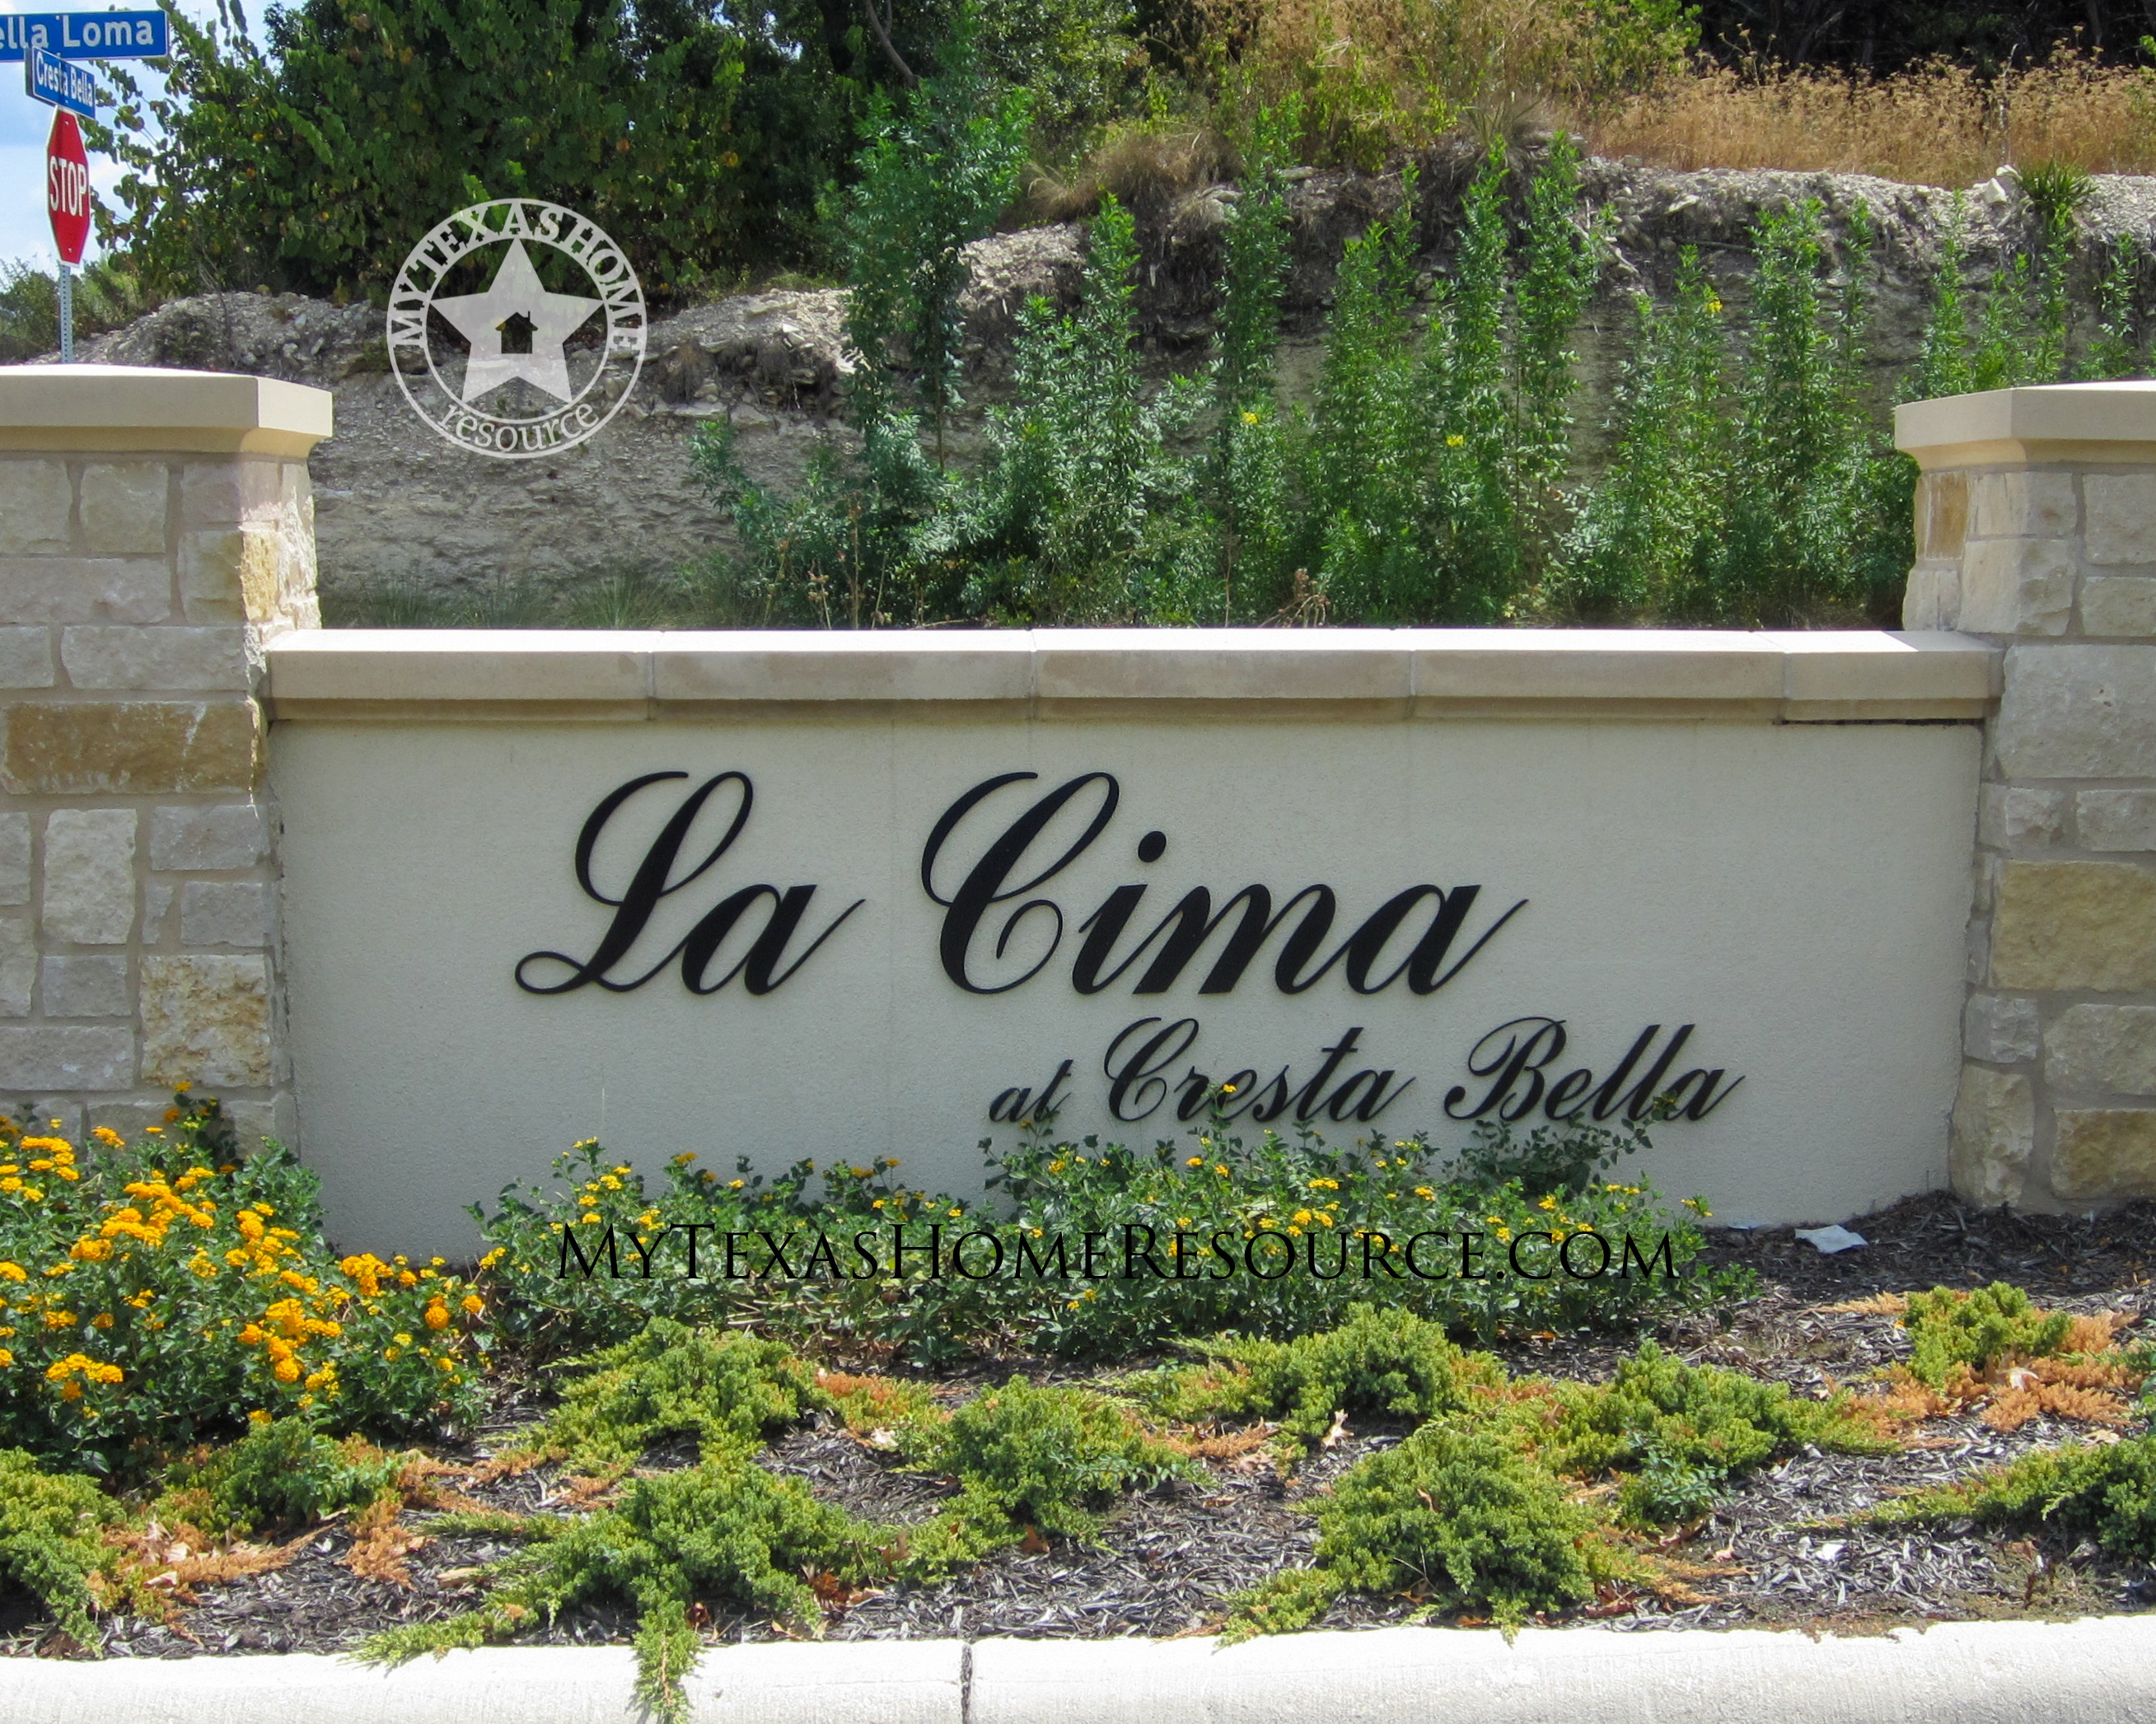 La Cima Cresta Bella社区网上正规的彩票网站，德克萨斯州